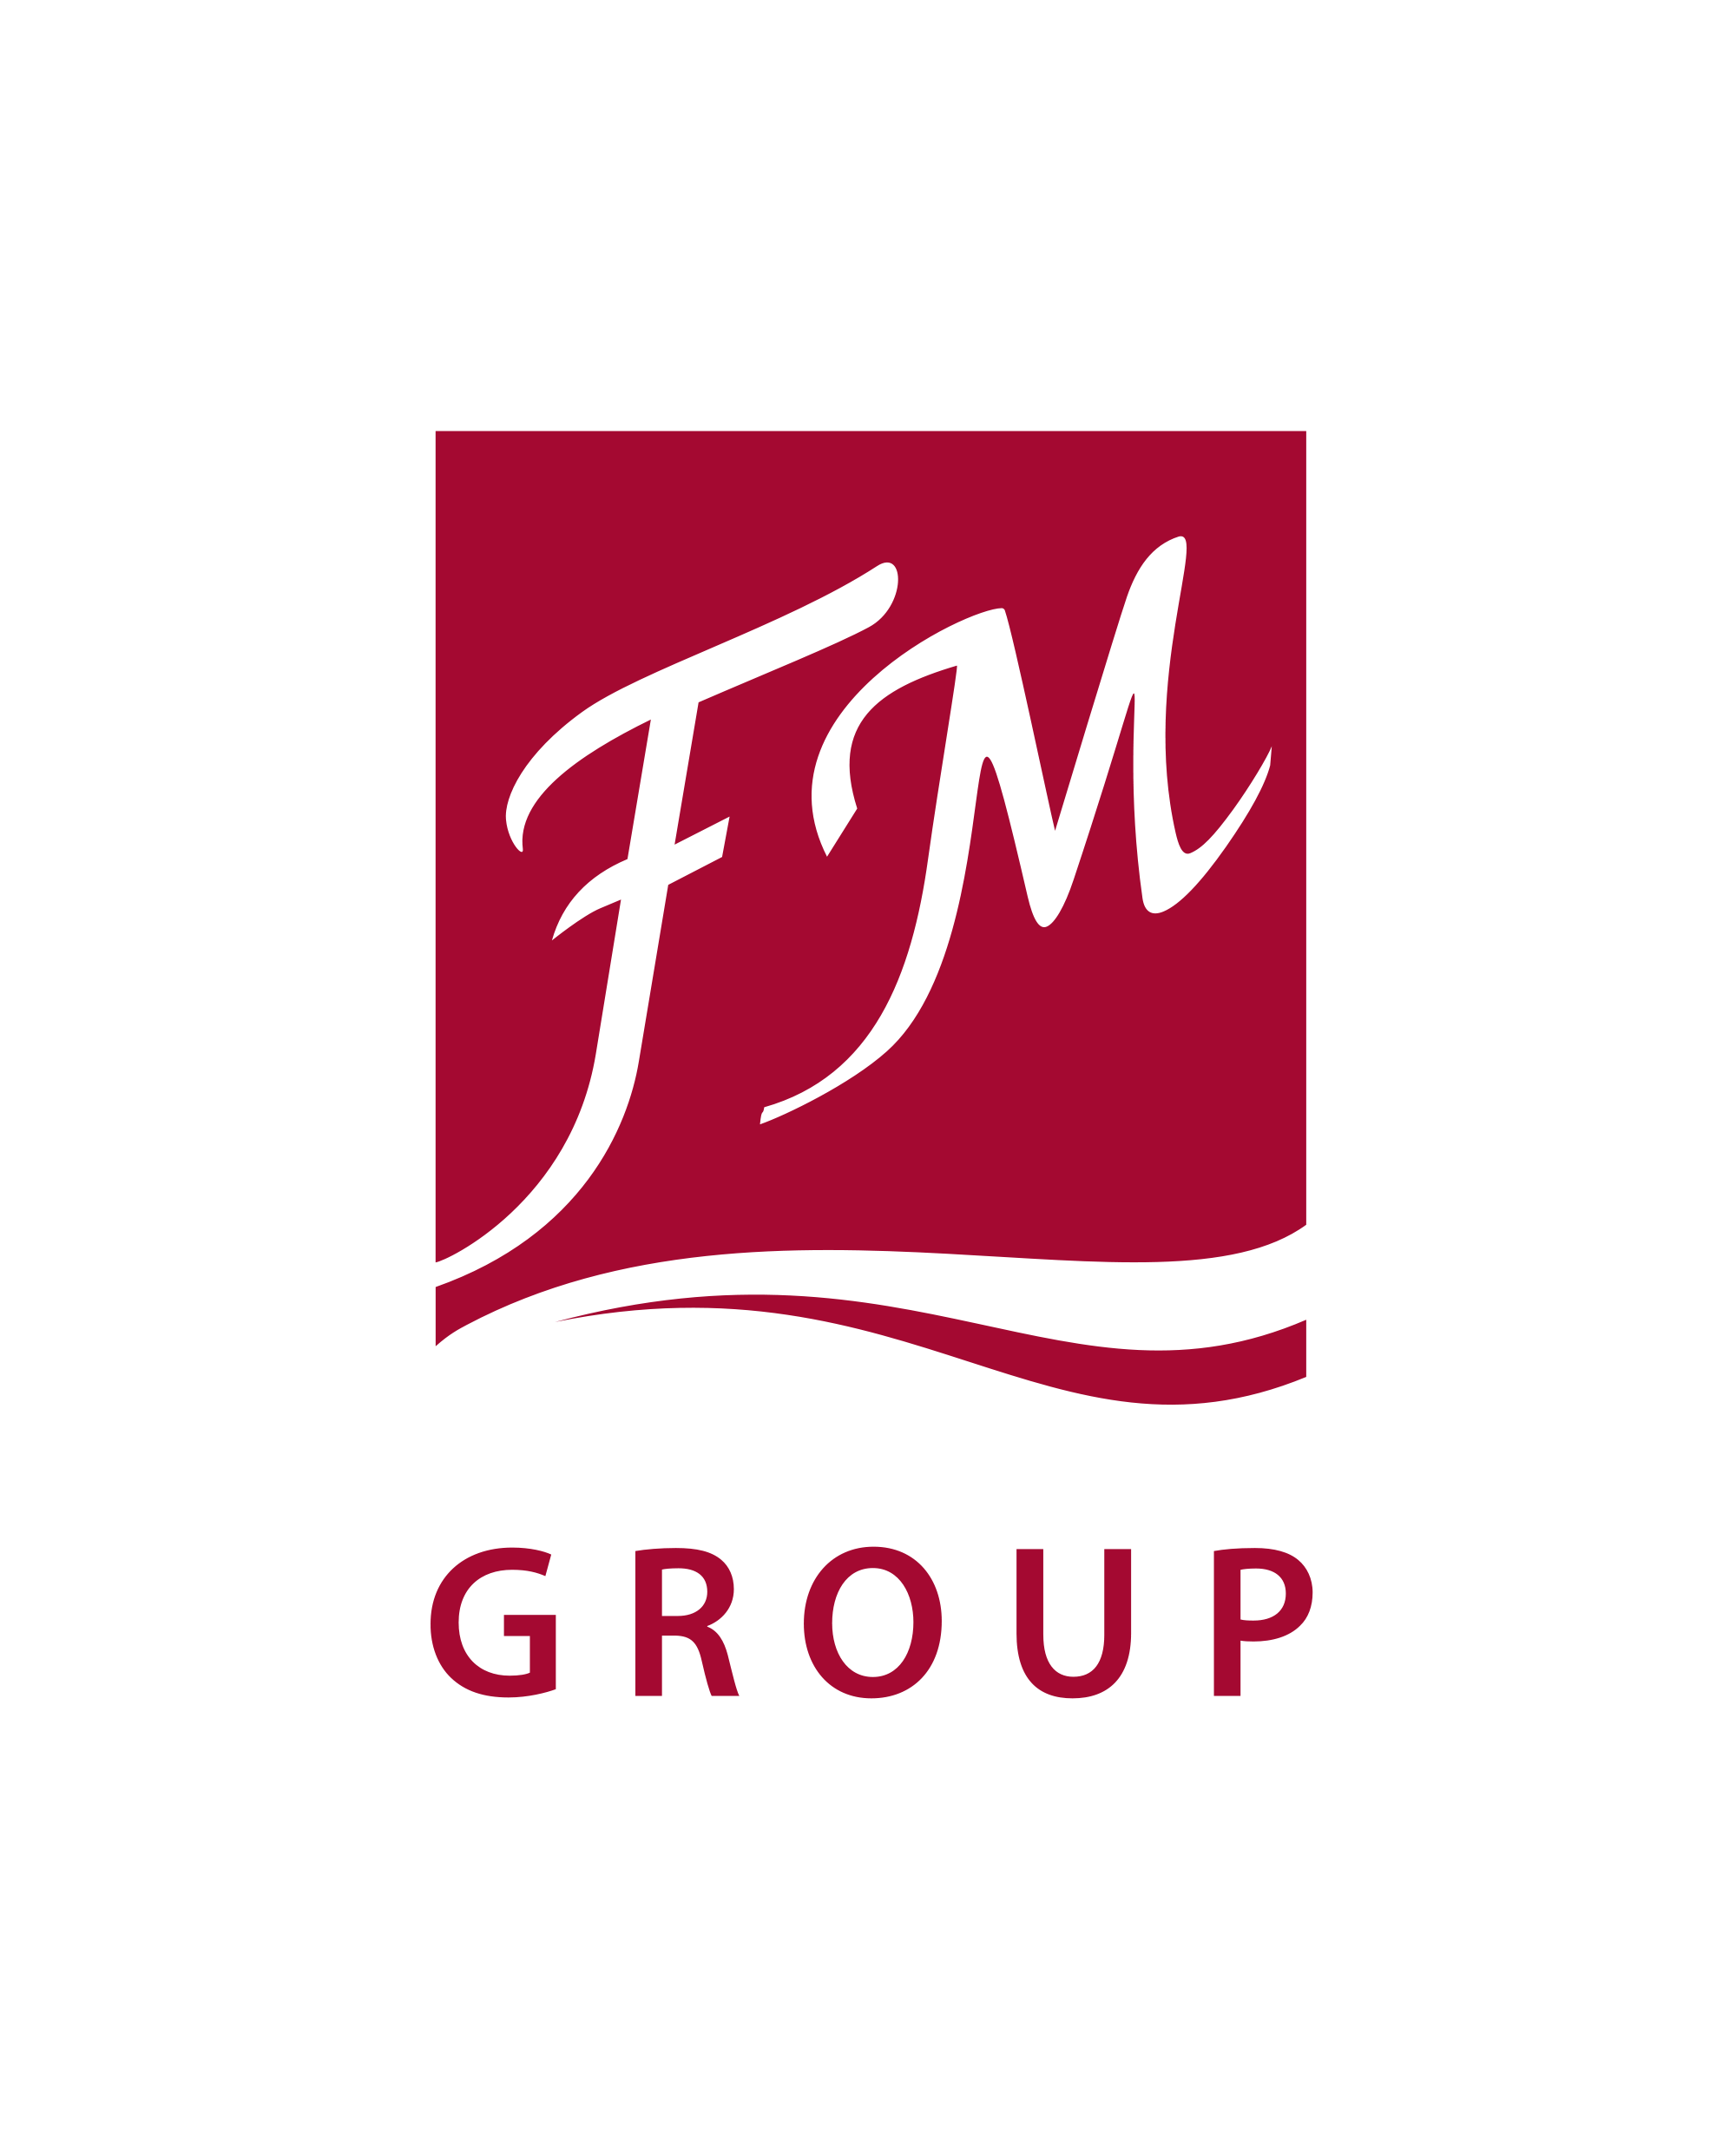 FM Logo - FM Group logo.svg